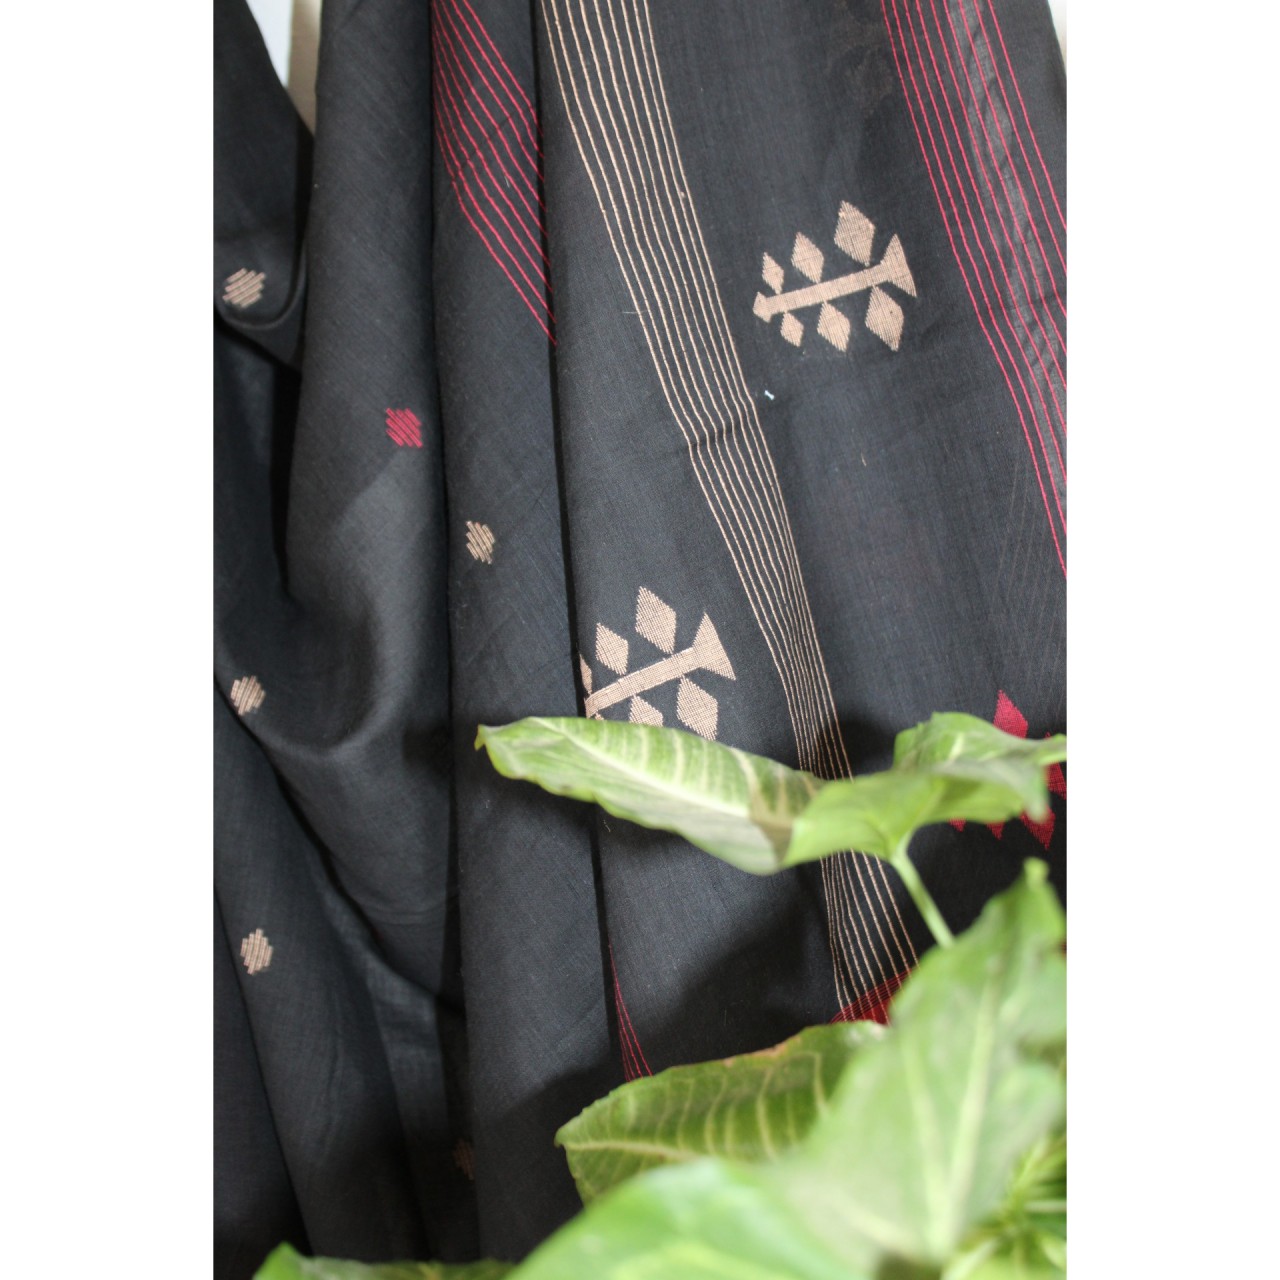 (1152) Cotton Azo-free dyed Jamdani sari from Burdwan with cotton motifs - Black, maroon